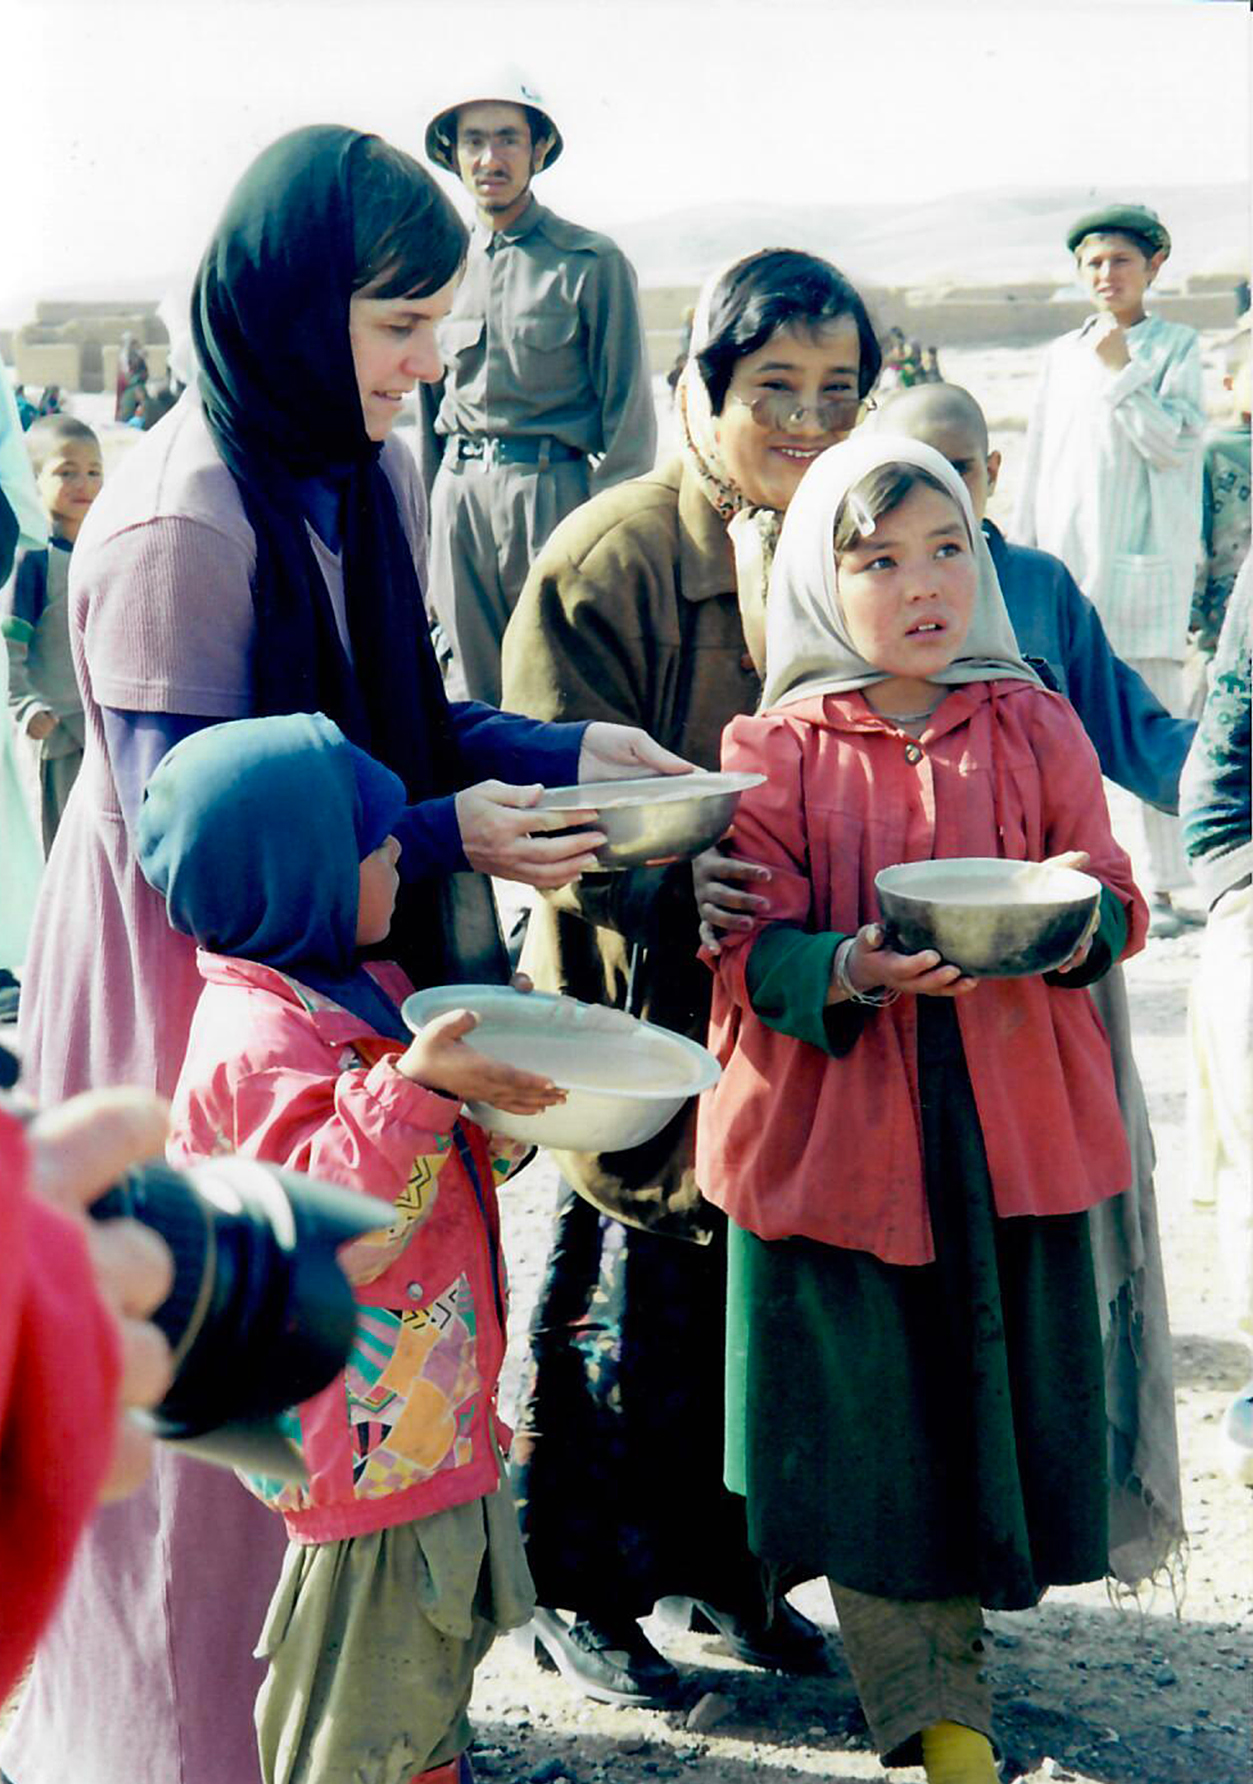  Afghanistan (2002) 